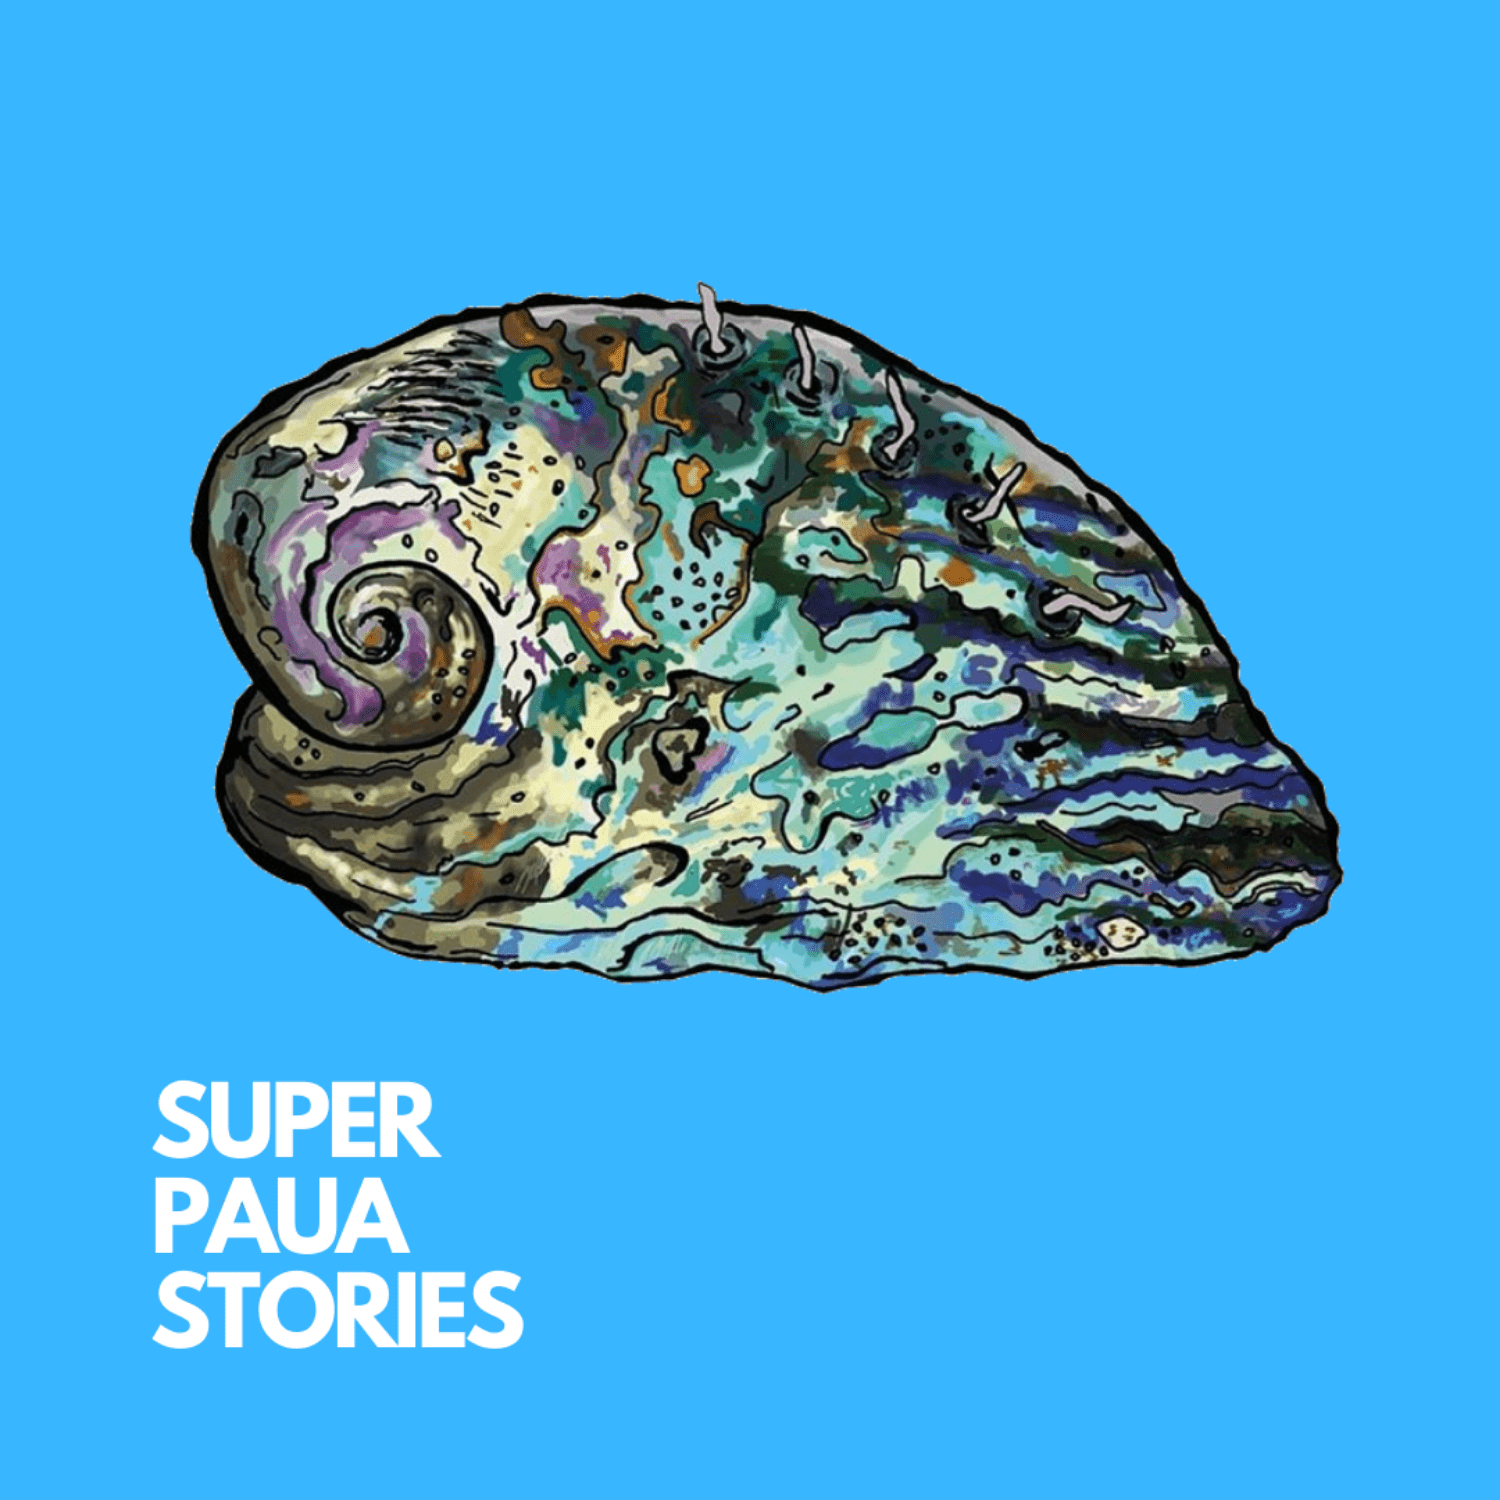 Super Paua Stories